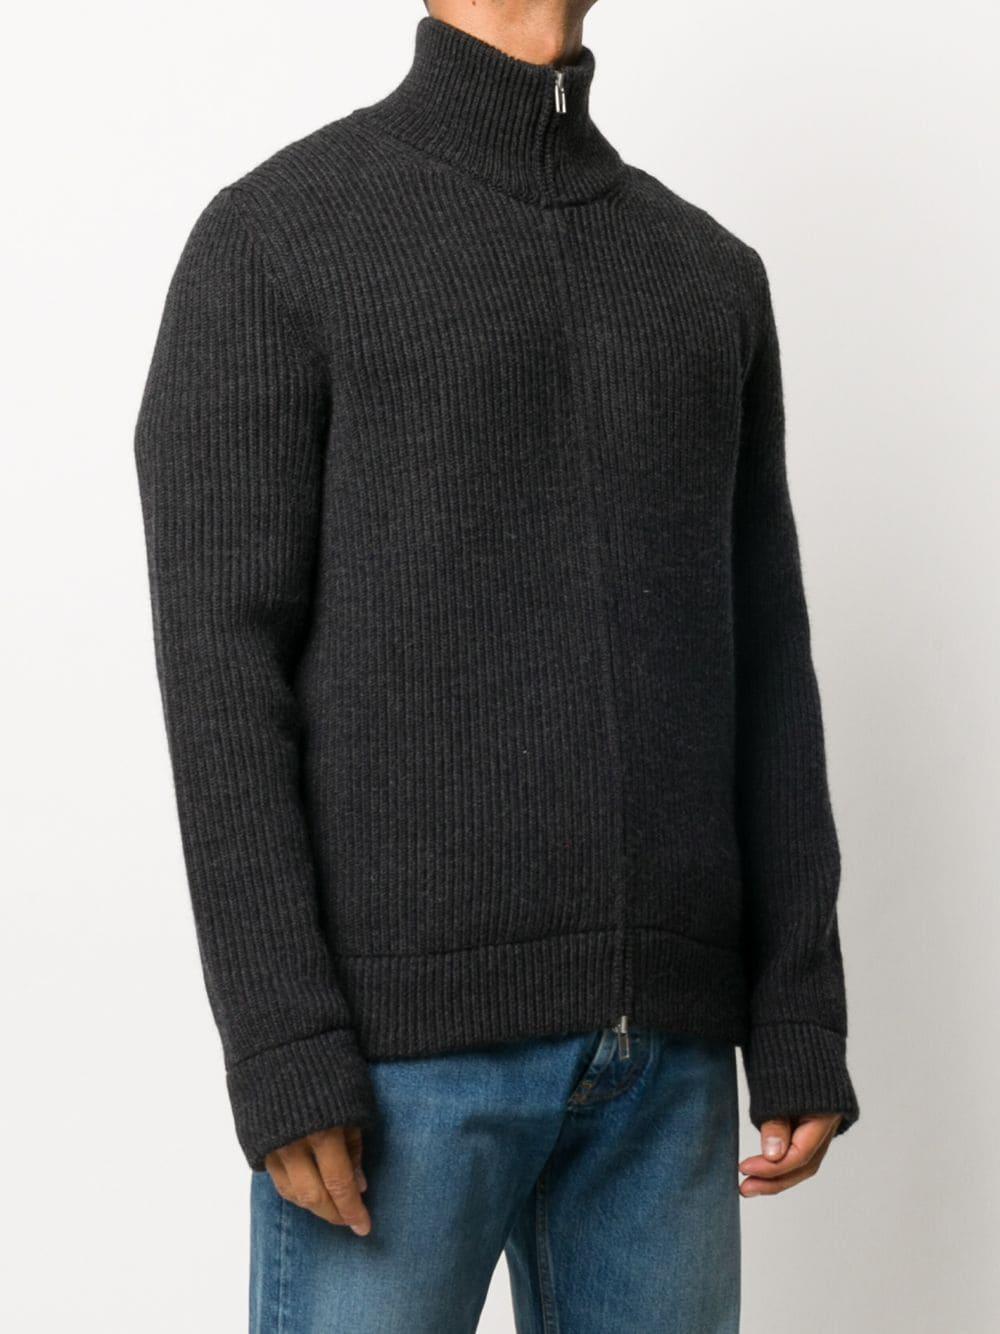 Maison Margiela Wool Zip-front Knitted Cardigan in Black for Men - Lyst